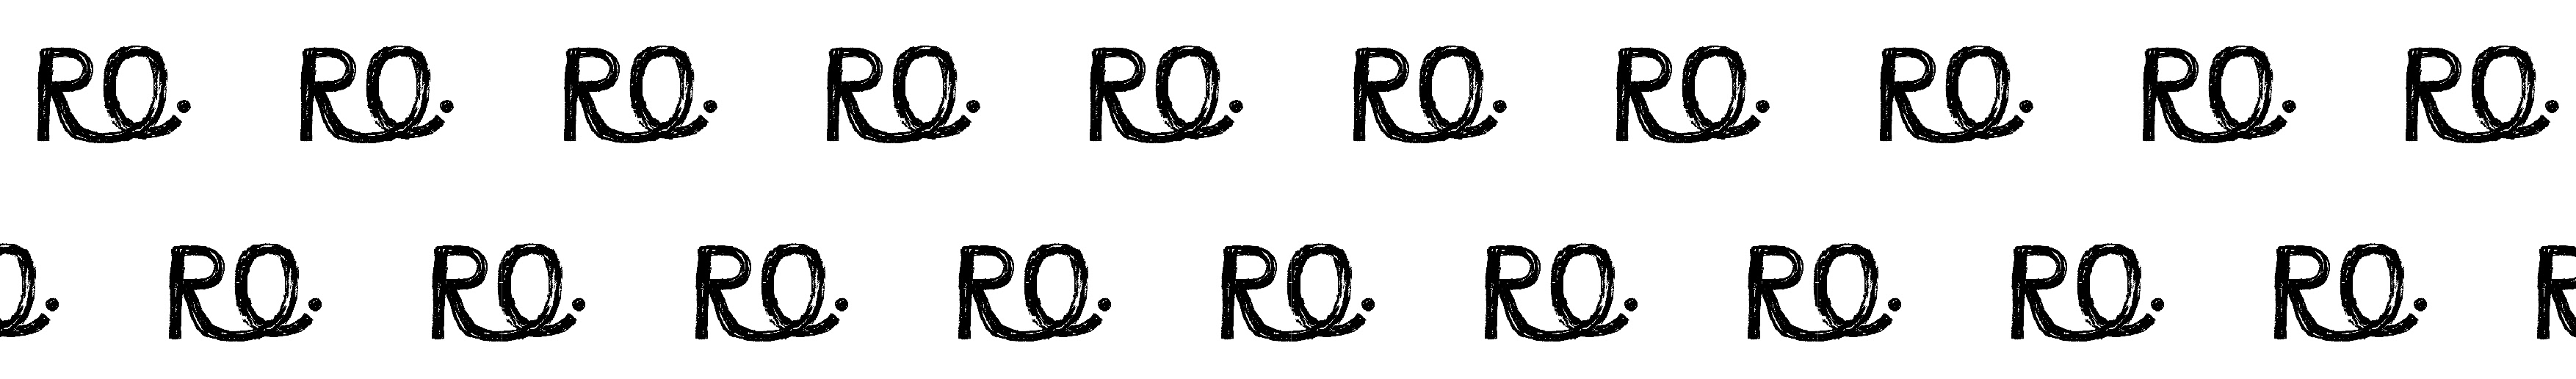 RO Designss profilbanner